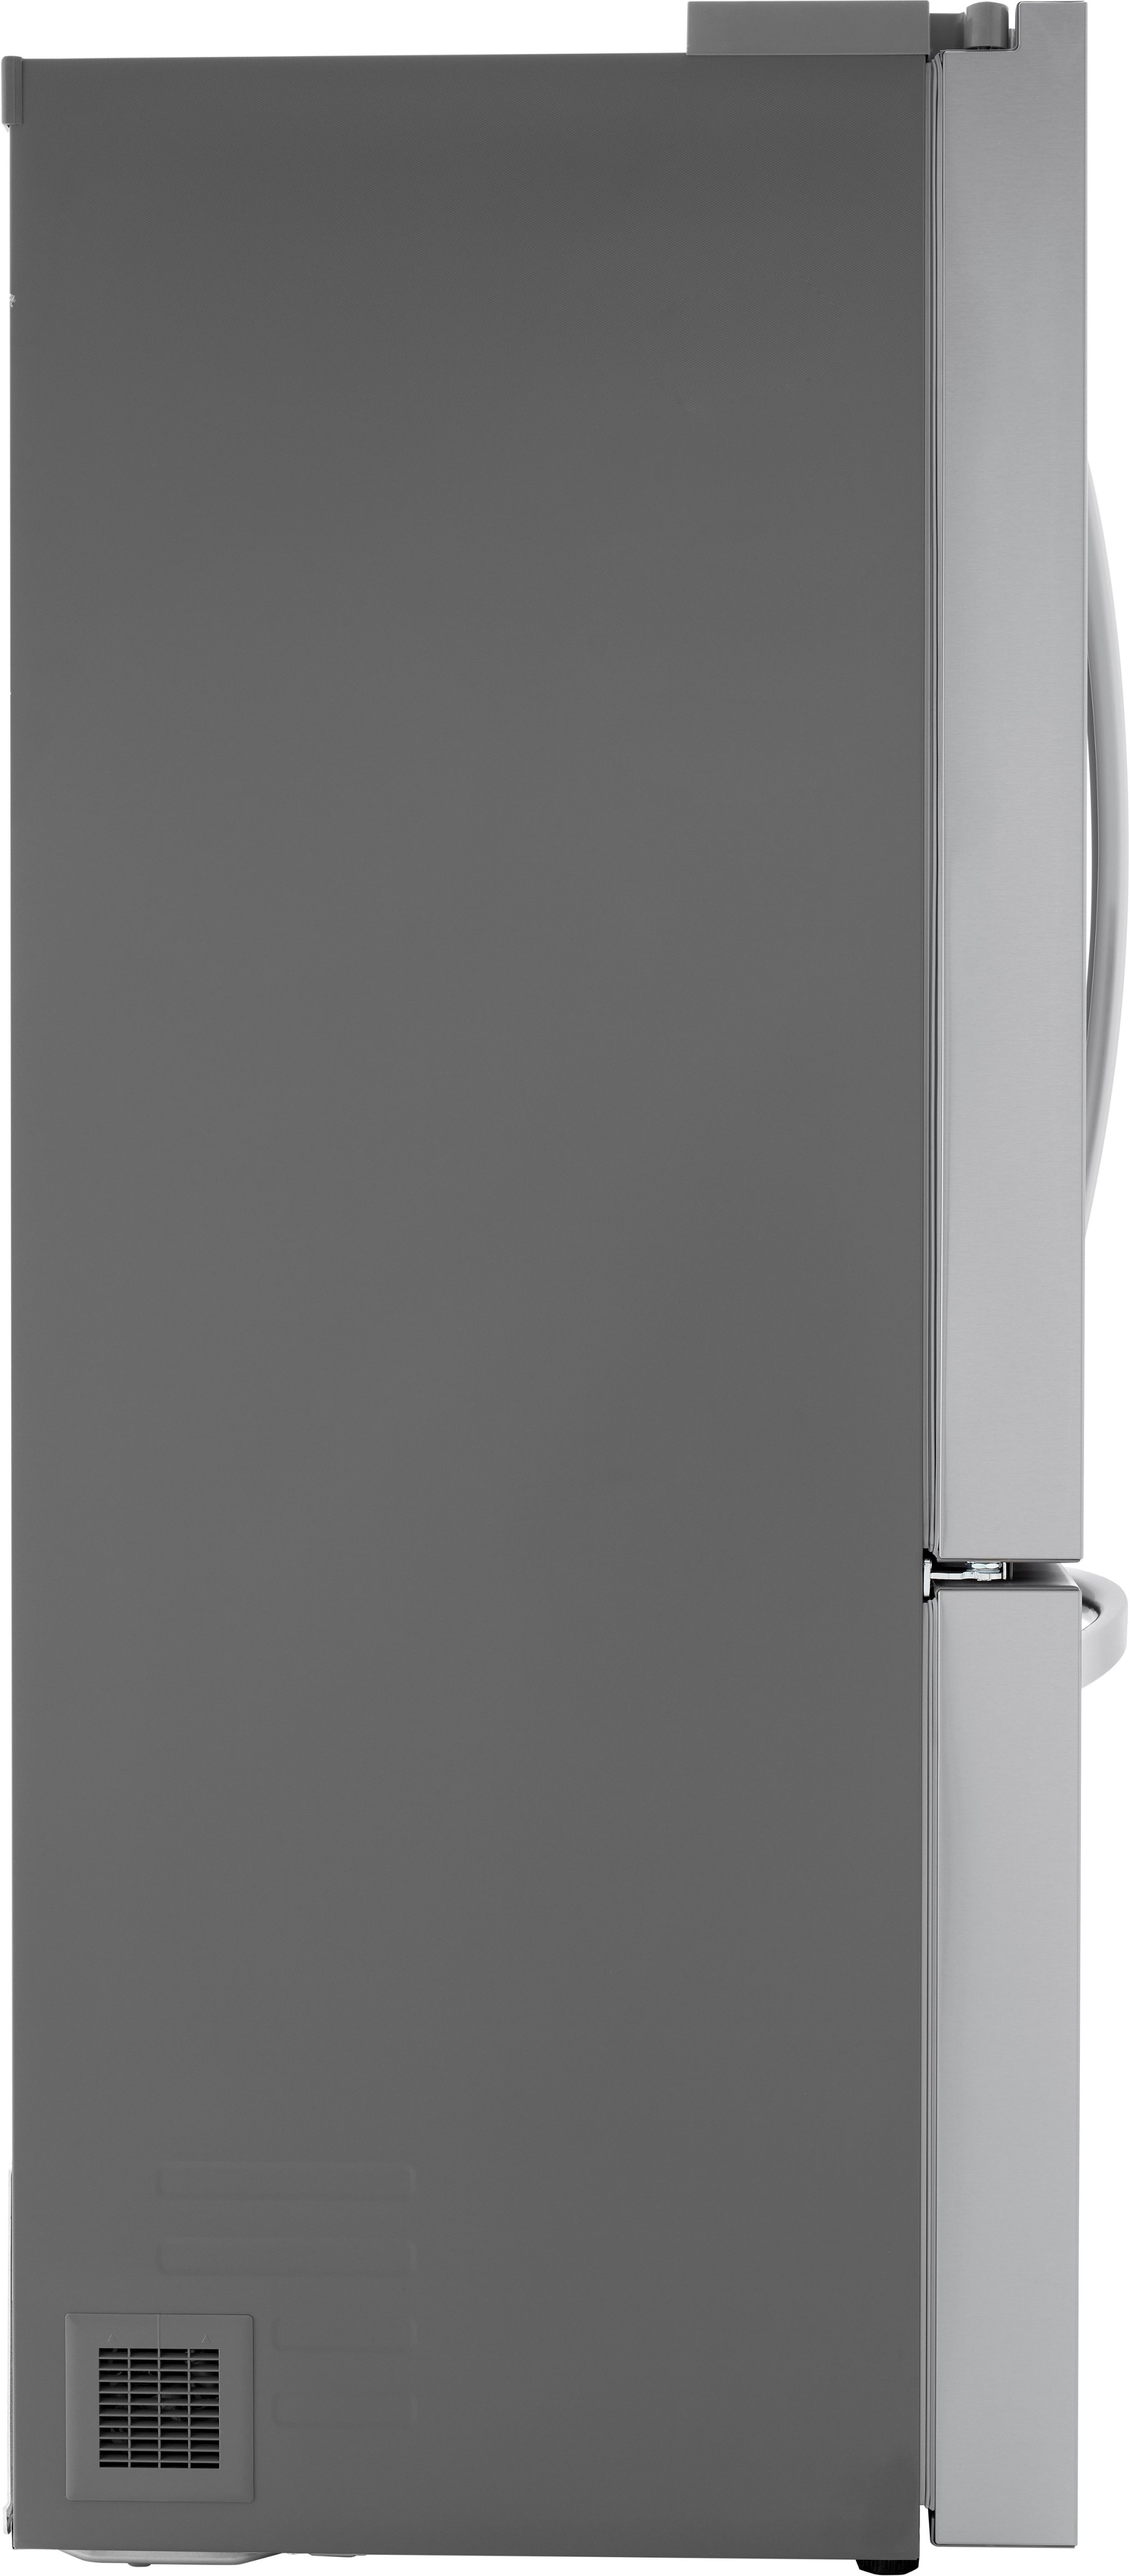 27 cu. ft. Counter-Depth MAX™ Refrigerator - LRFGC2706S